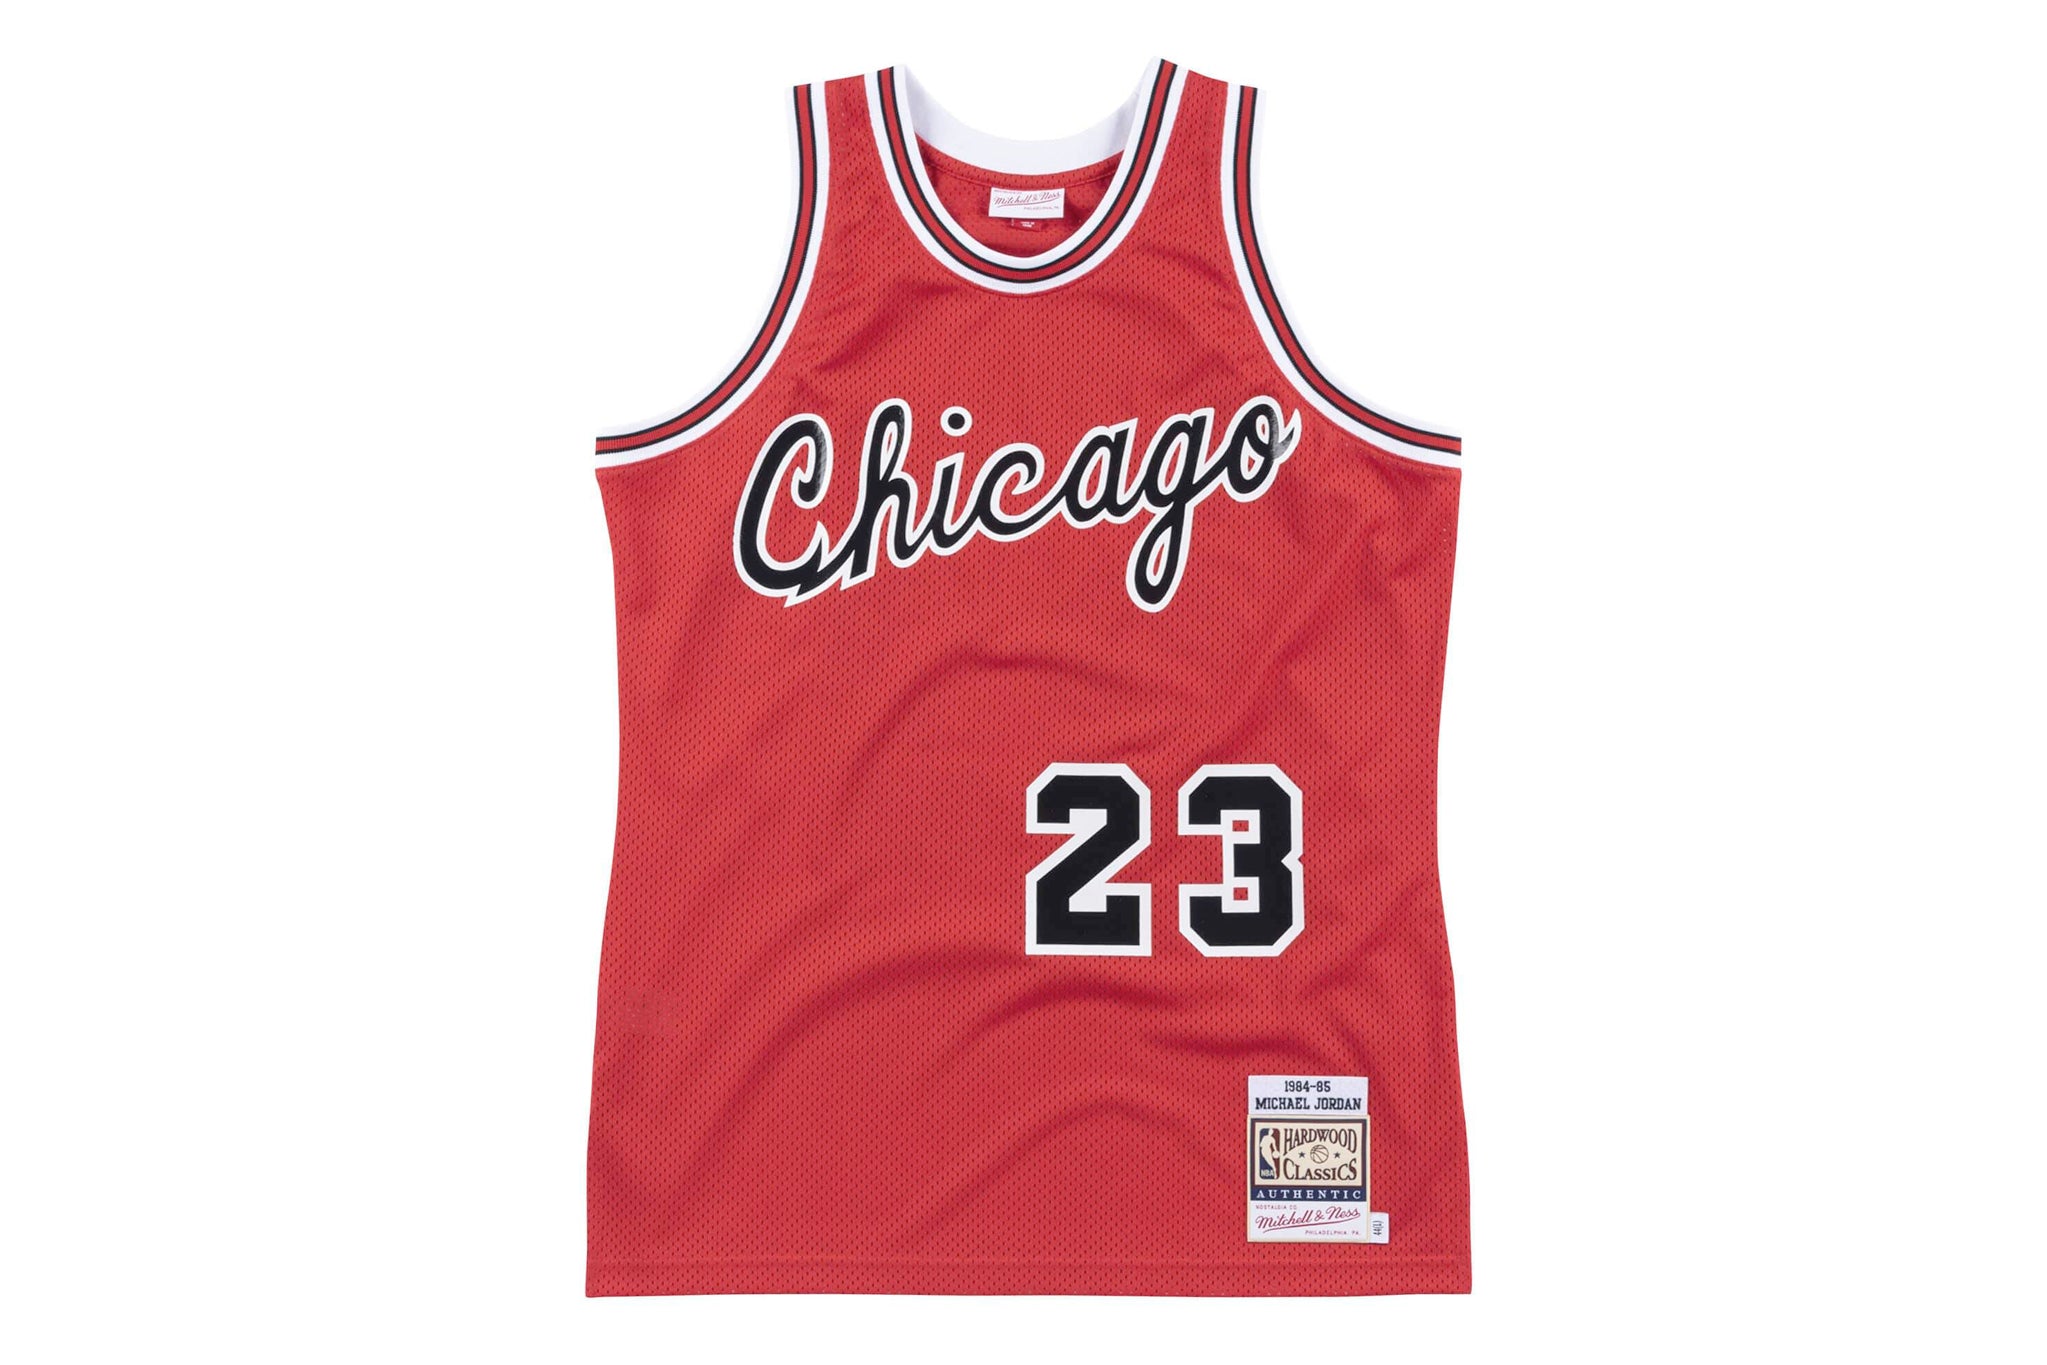 Mitchell & Ness Authentic 1984 Chicago Bulls Michael Jordan Rookie Jersey